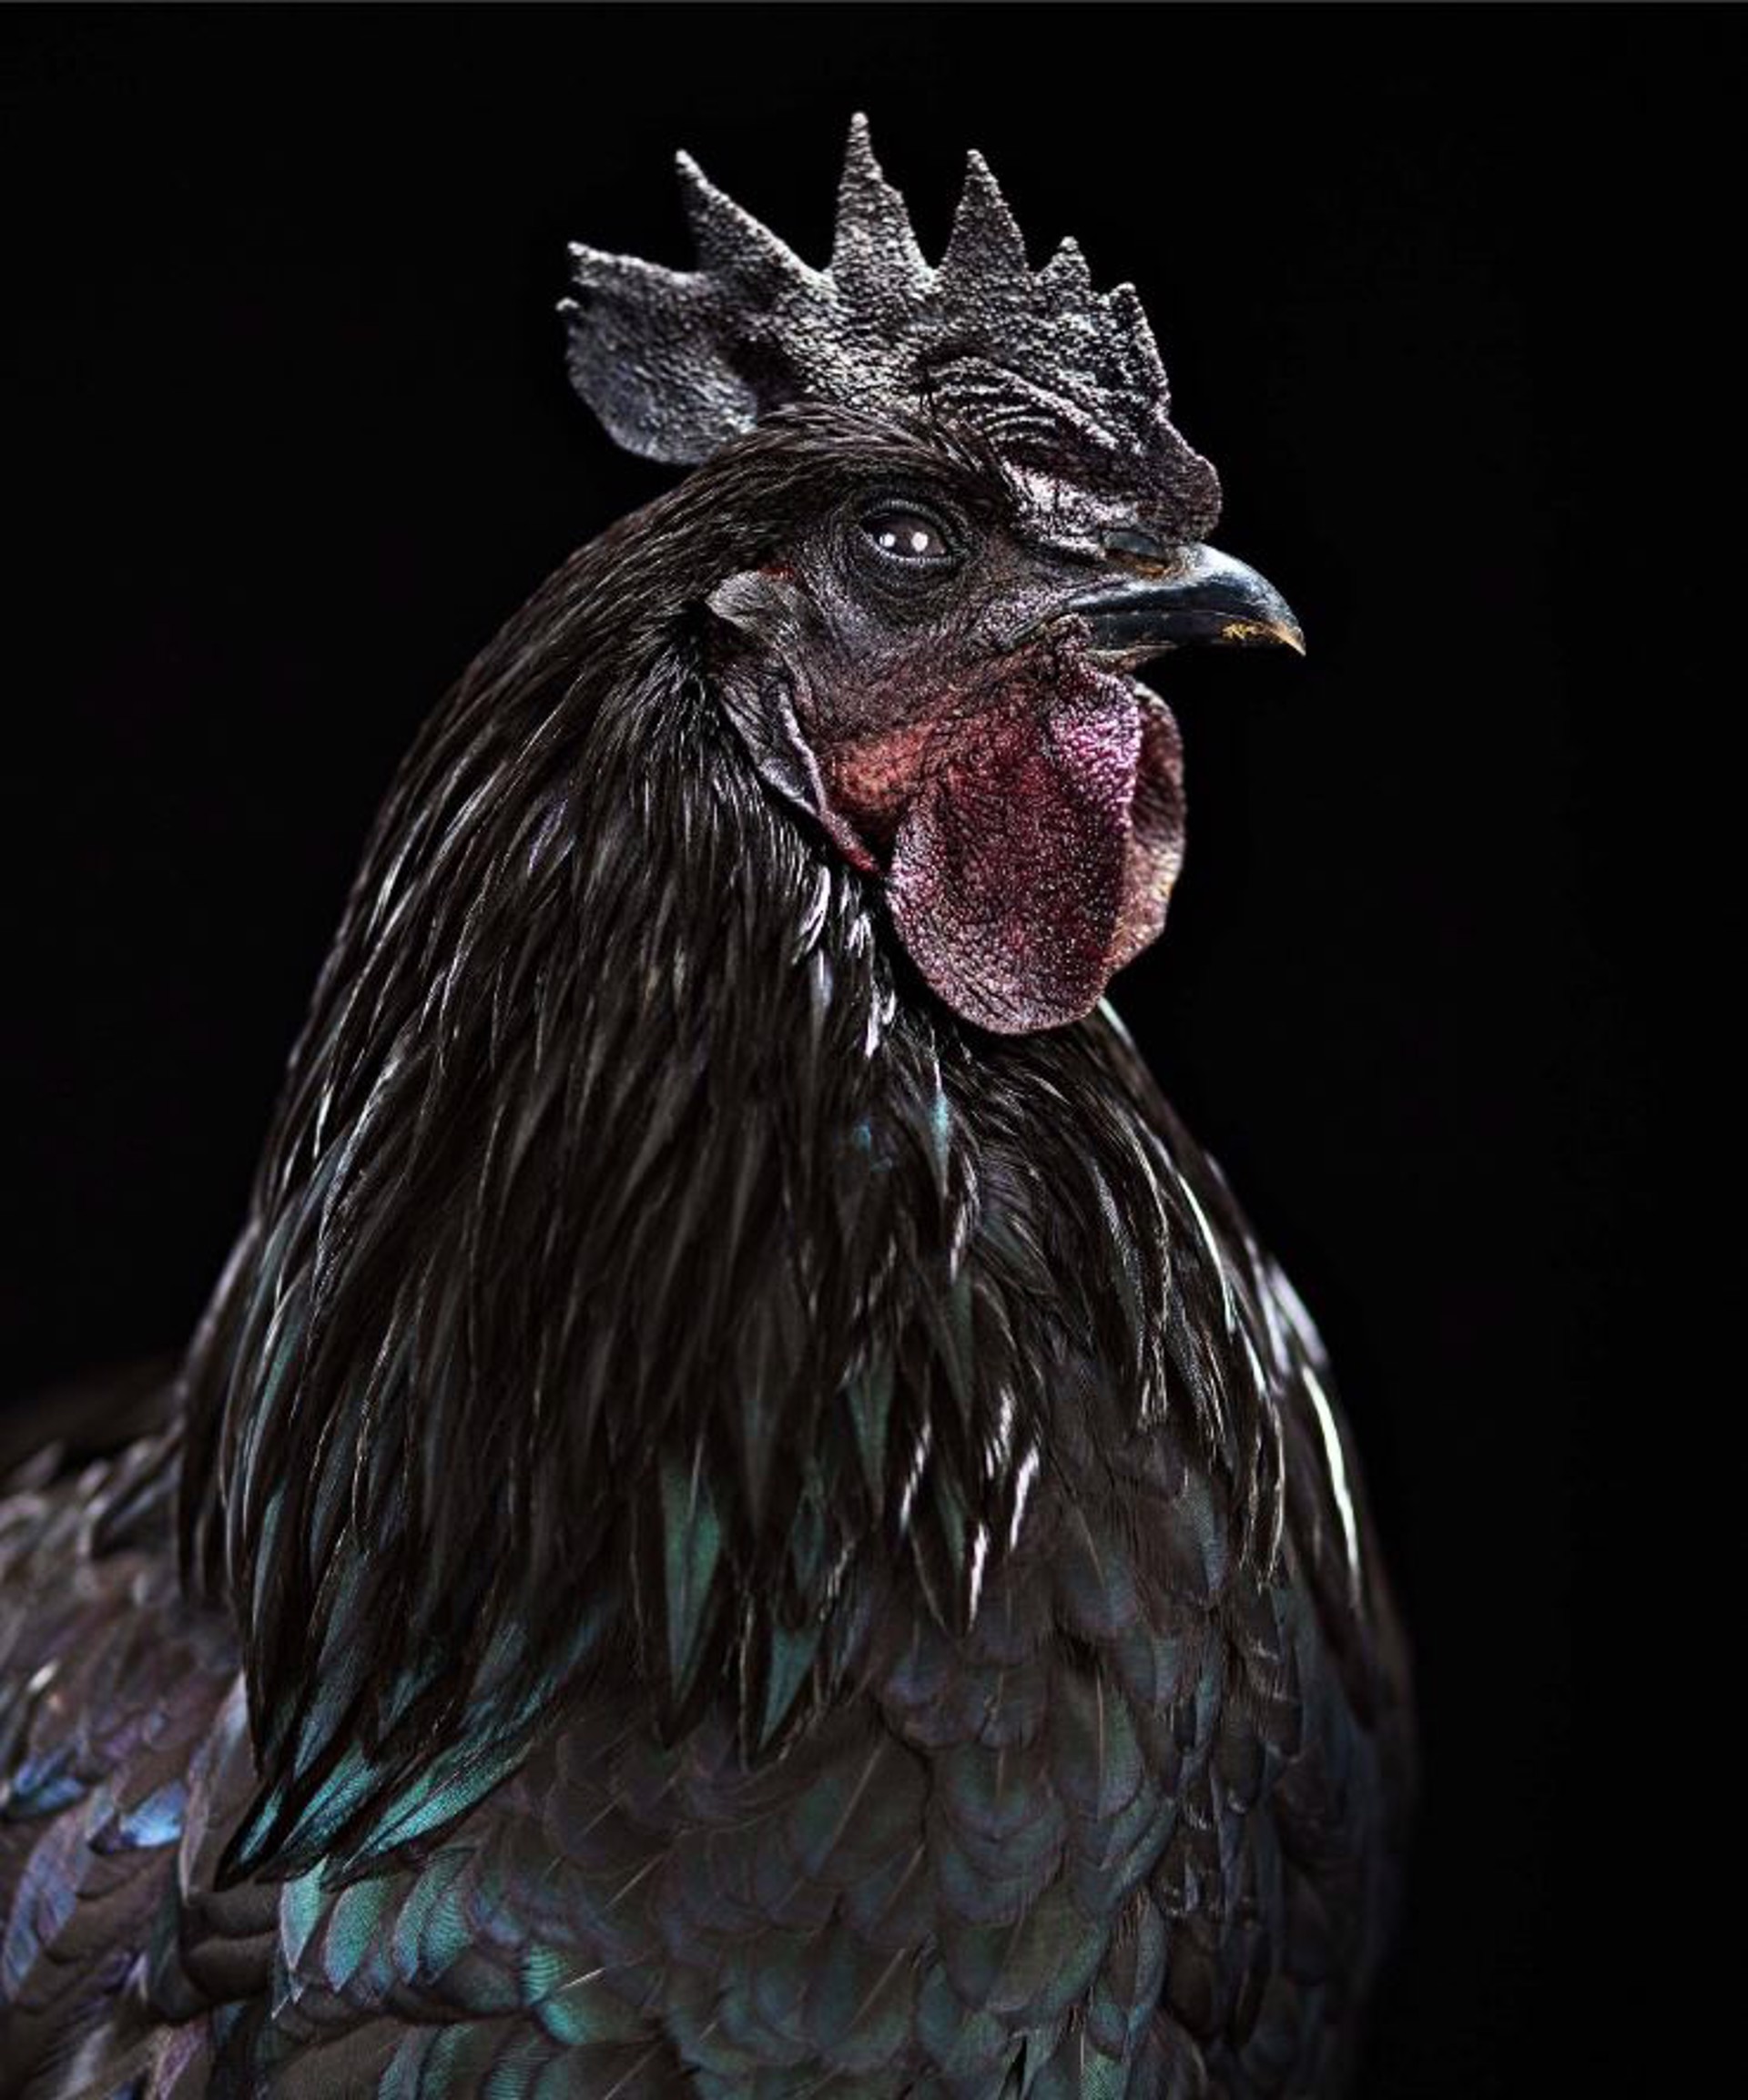 Ayam Cemani Rooster by Evan Kafka